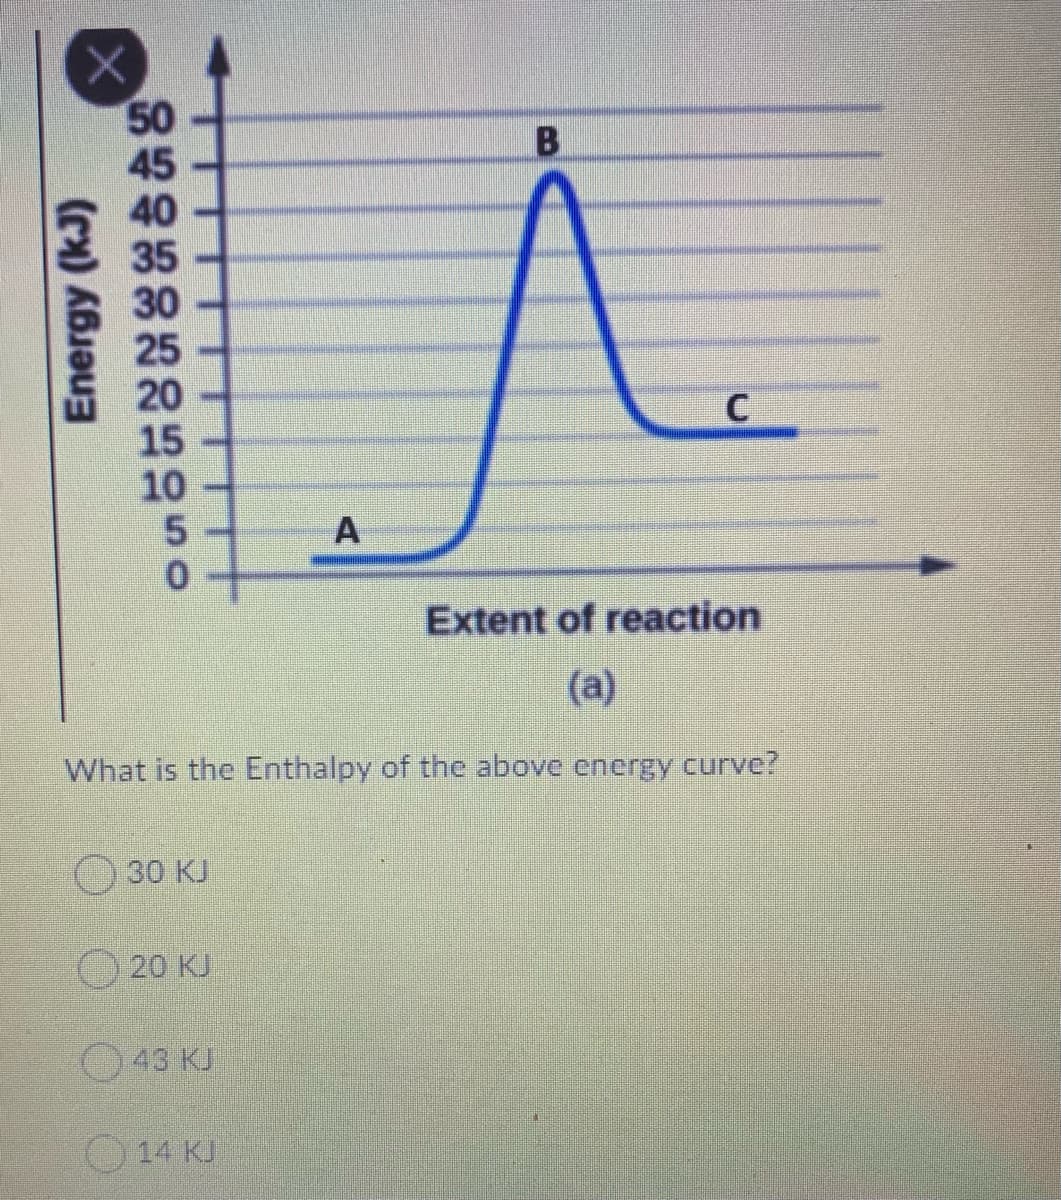 50
45
40
35
30
25
20
15
10
B
A
Extent of reaction
(a)
What is the Enthalpy of the above energy curve?
O 30 KJ
20 KJ
43 KJ
O14 KJ
Energy (kJ)
